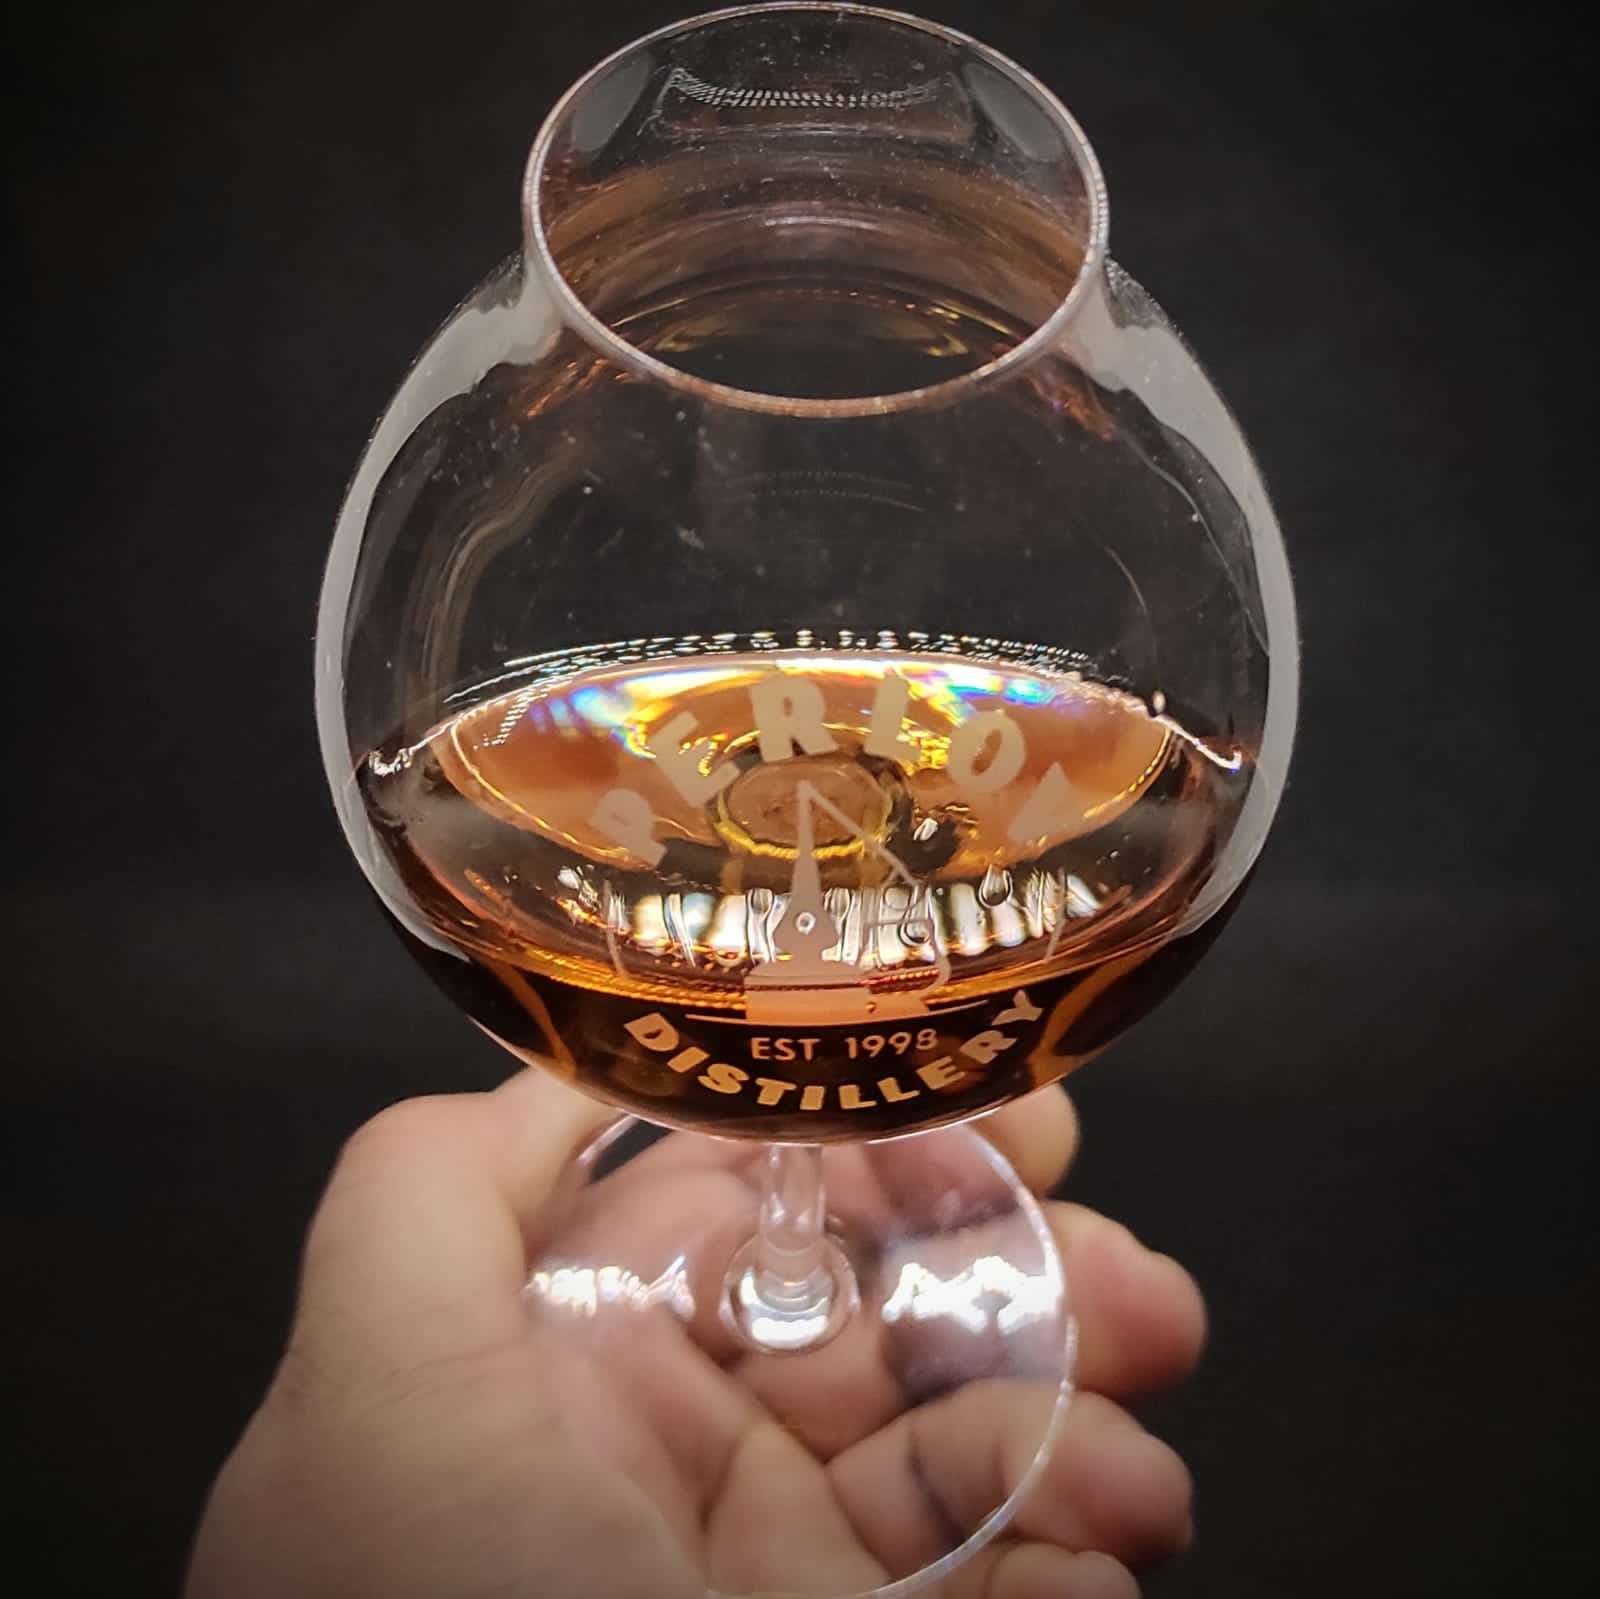 Four Small Casks Single malt whisky от Perlov Distilley